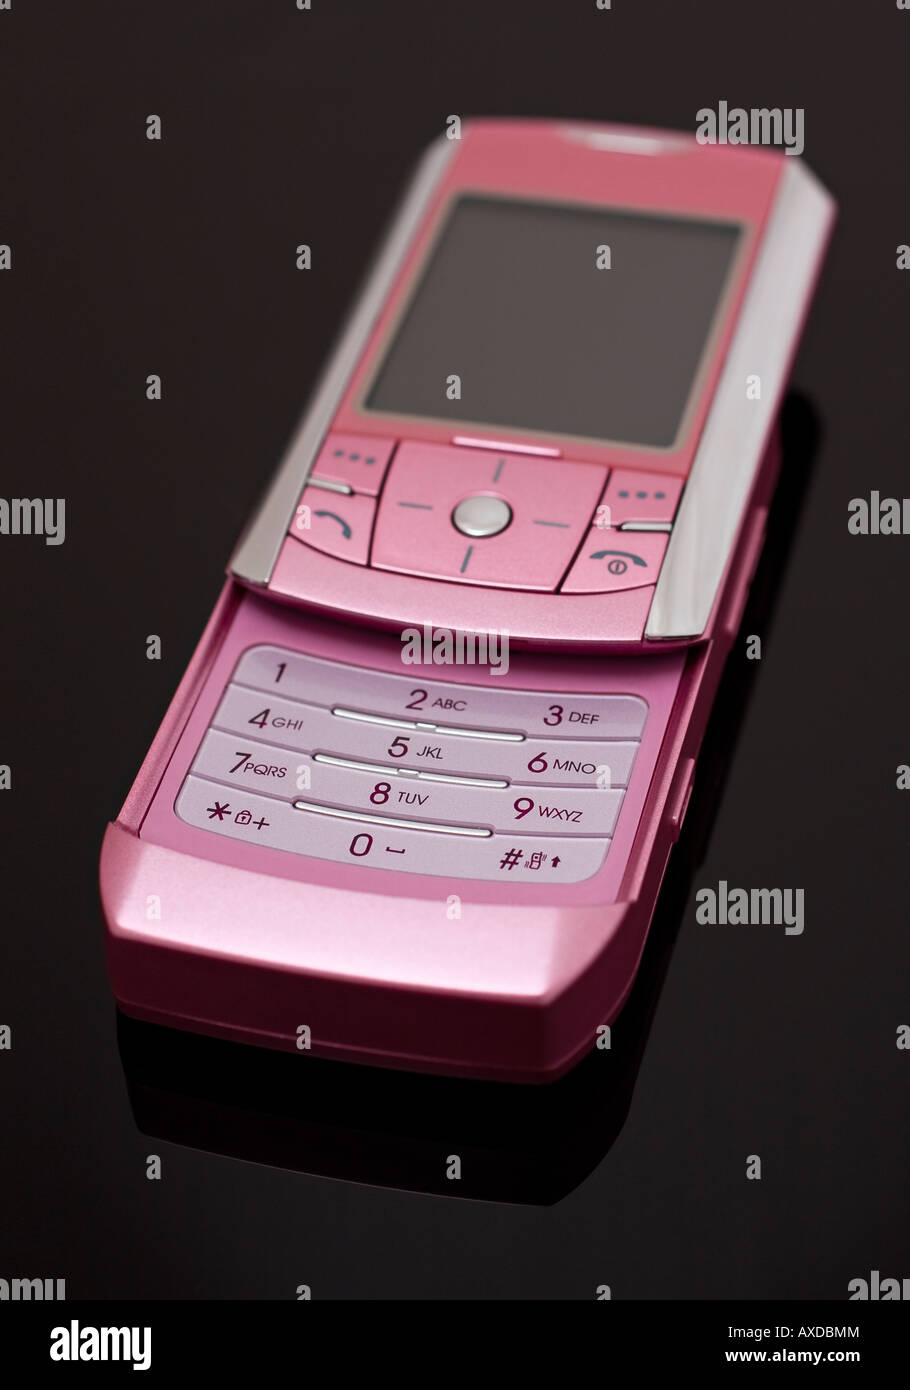 Pink mobile slider phone on a plain black background - no logo visible Stock Photo